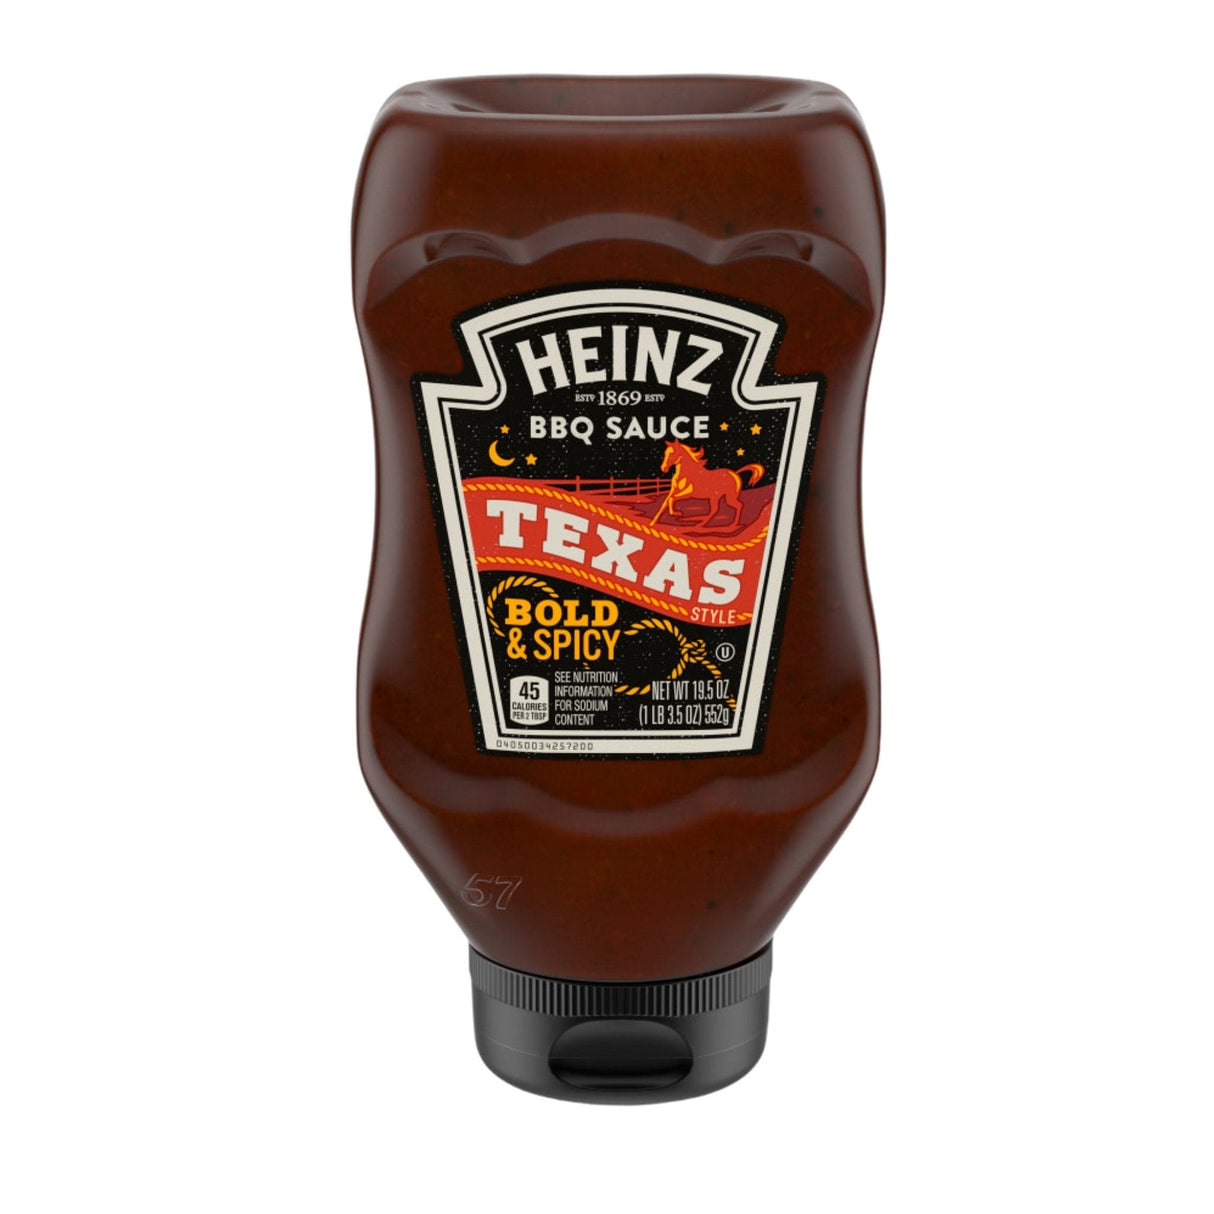 Heinz Texas Bold & Spicy BBQ Sauce - hot sauce market & more